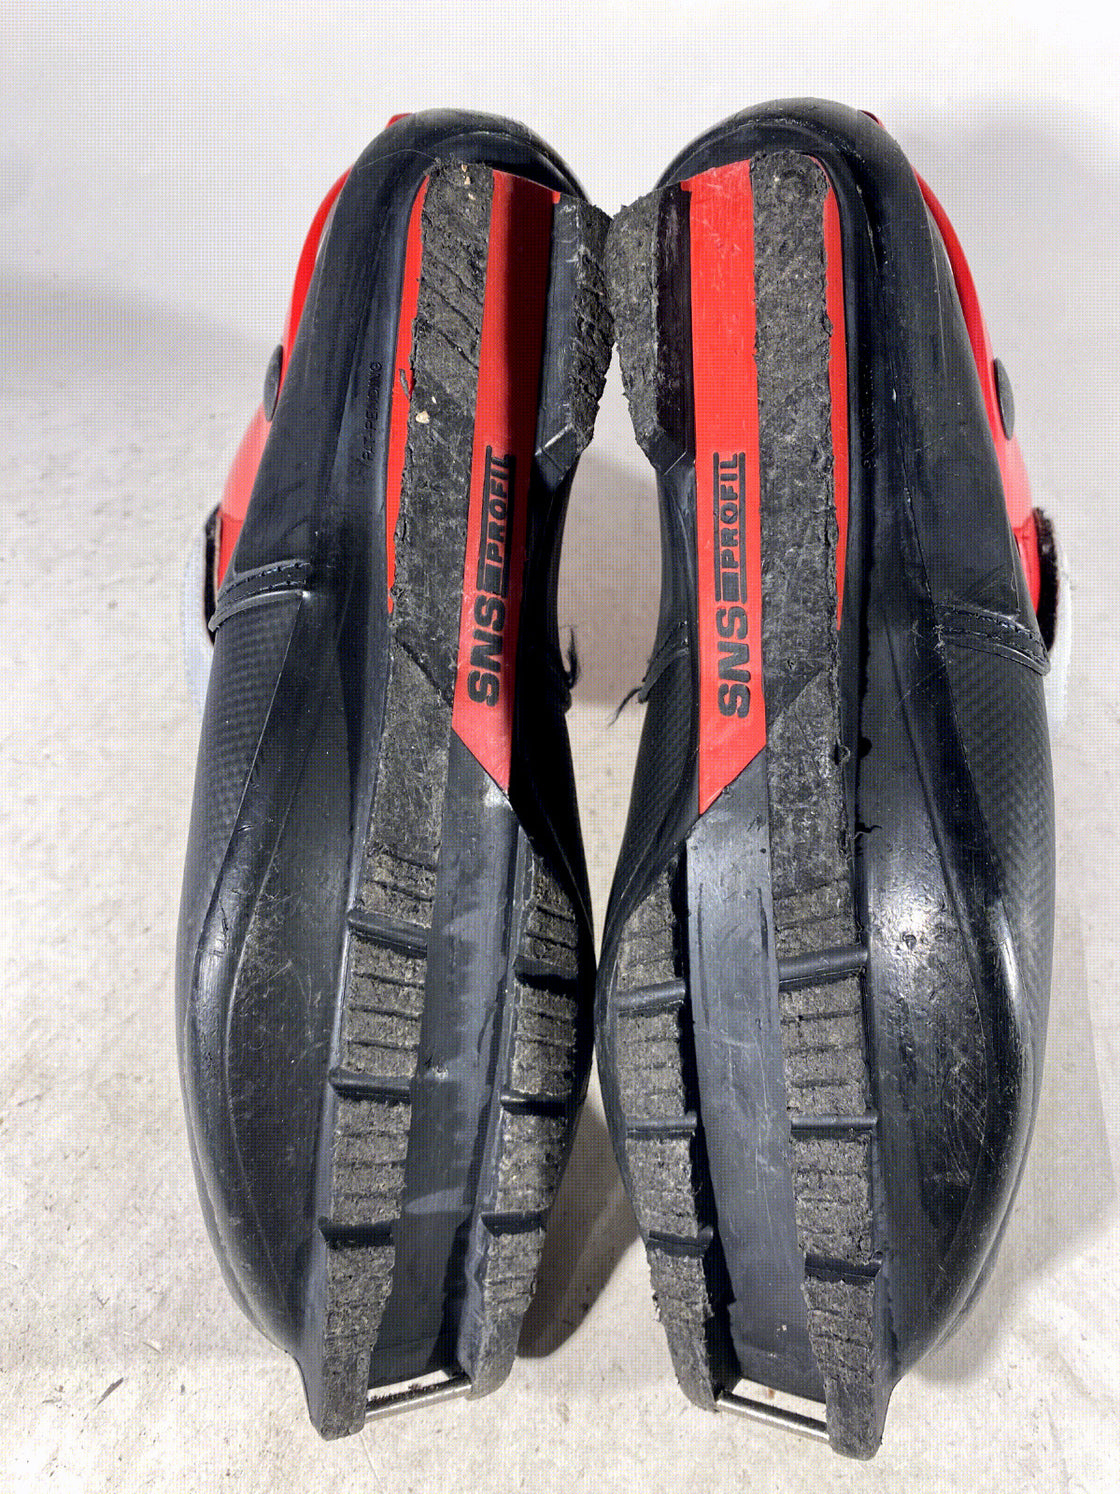 Salomon Skate Nordic Cross Country Ski Boots Size EU42 2/3 US9 SNS Profil